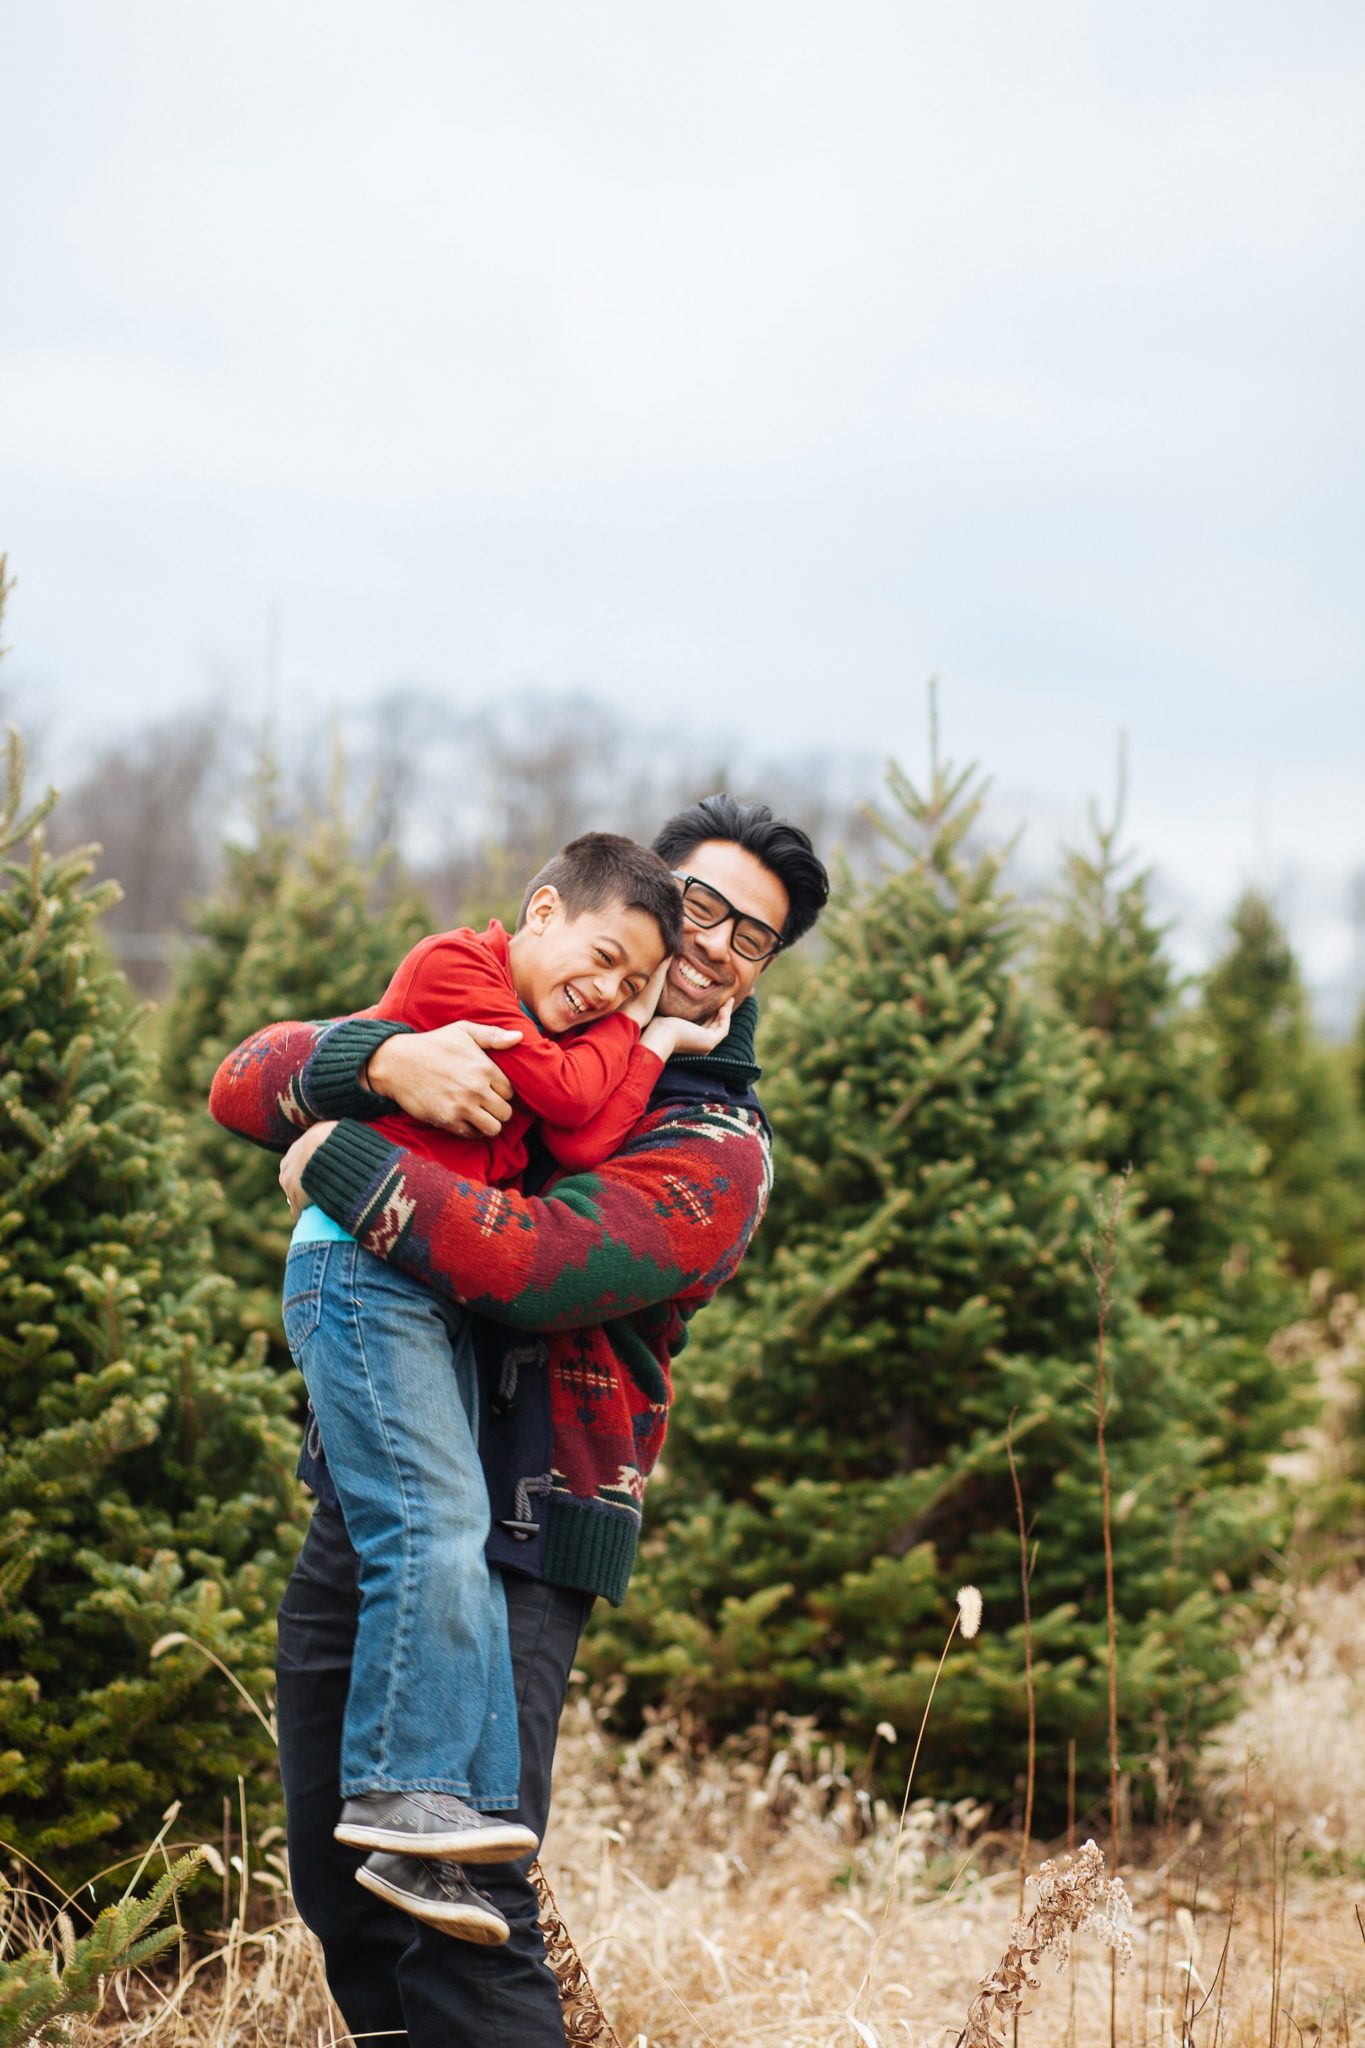 5 Best Christmas Tree Lots In Orange County